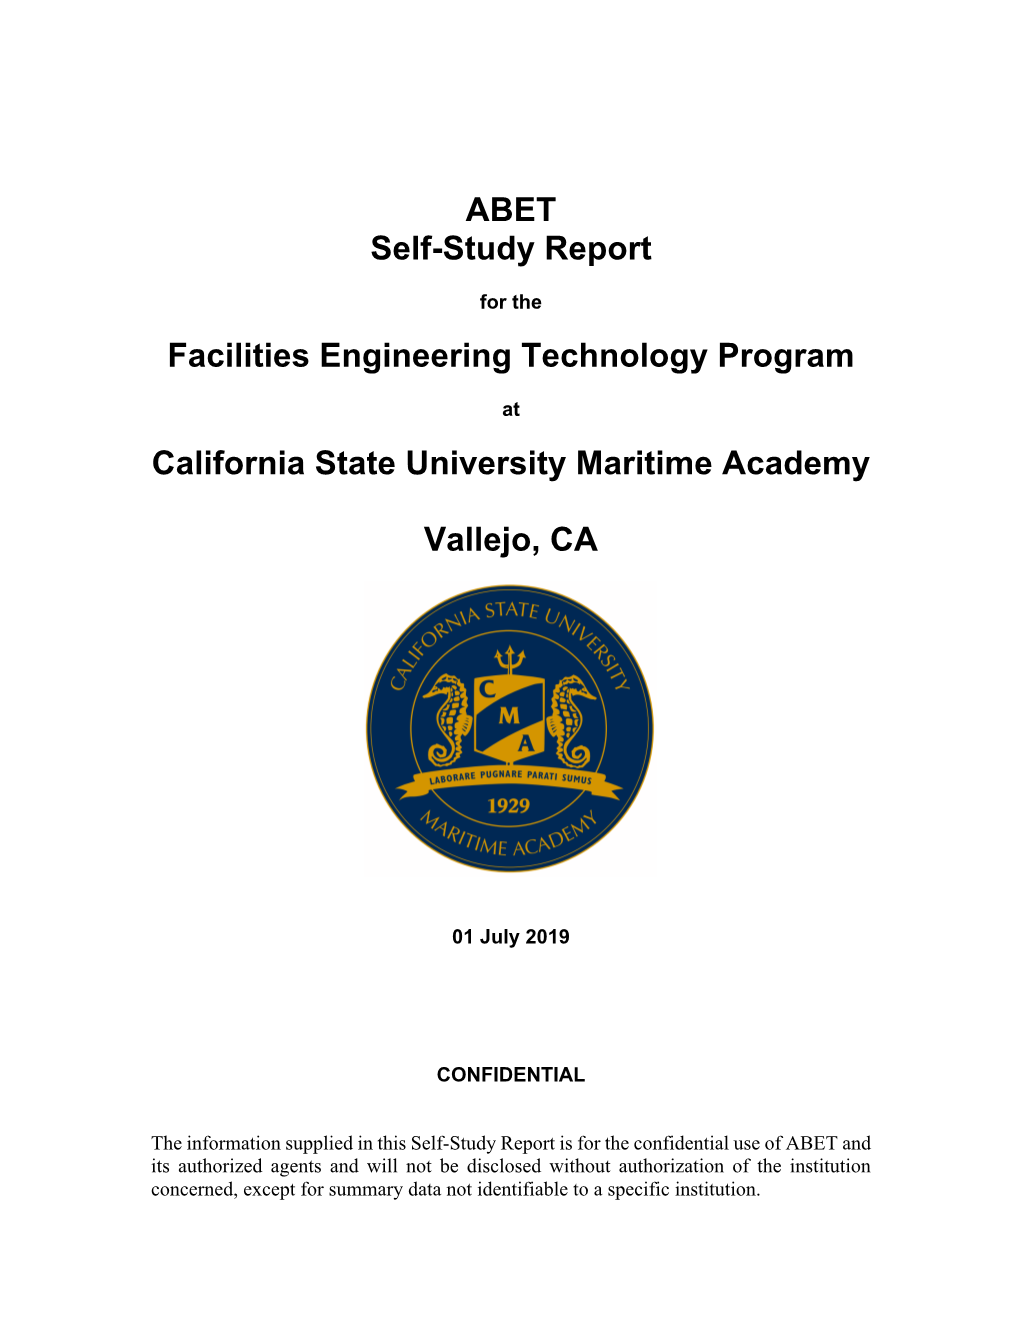 ABET Self-Study Report Facilities Engineering Technology Program